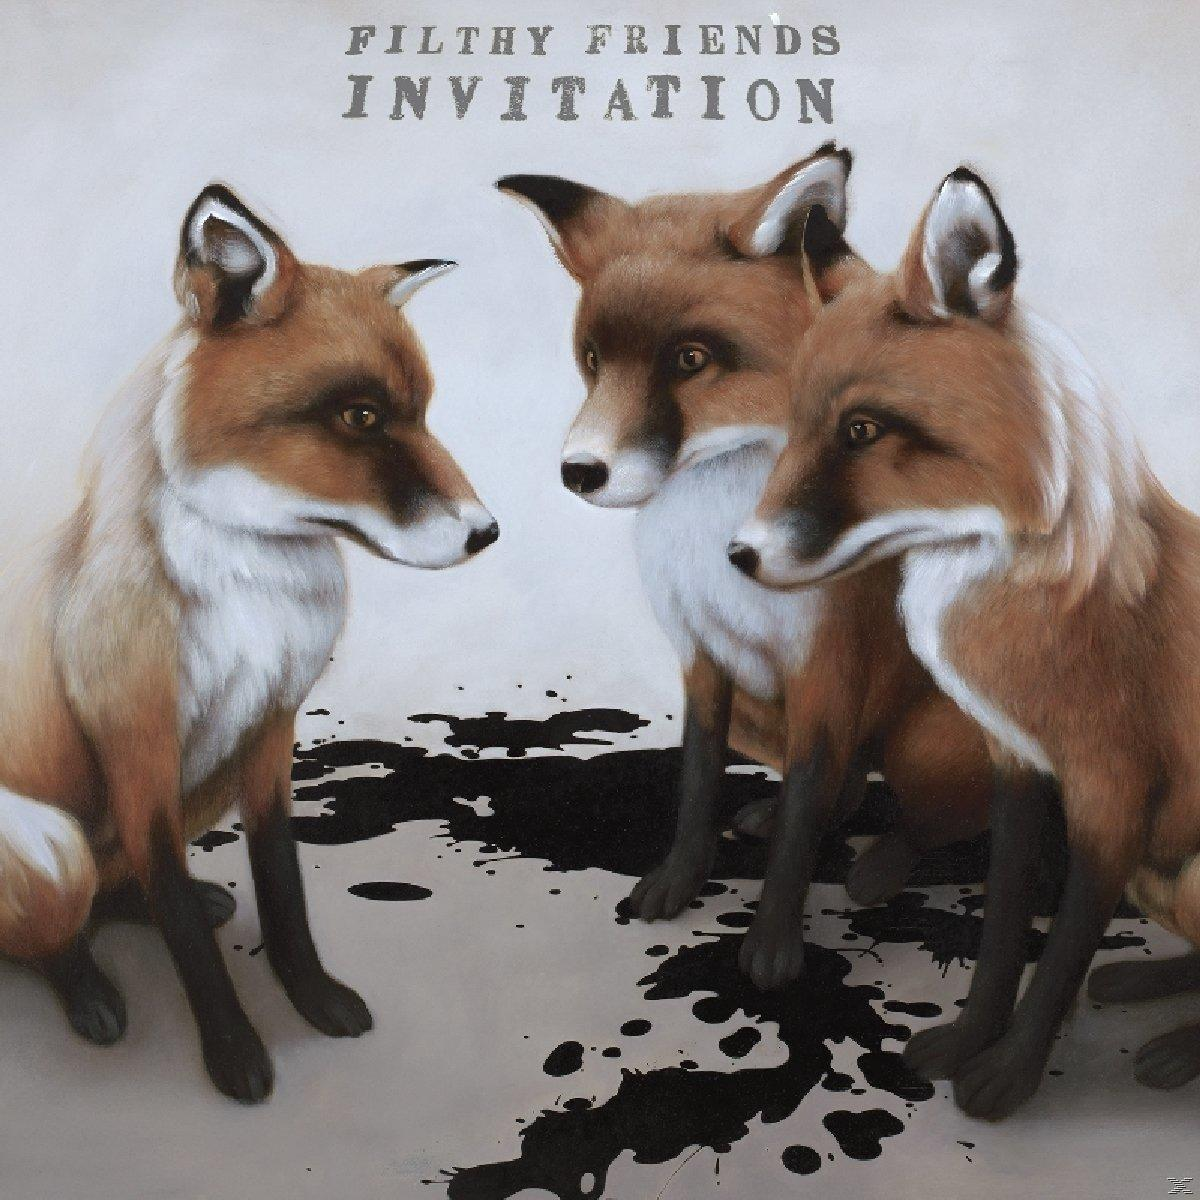 Friends - Filthy (CD) INVITATION -